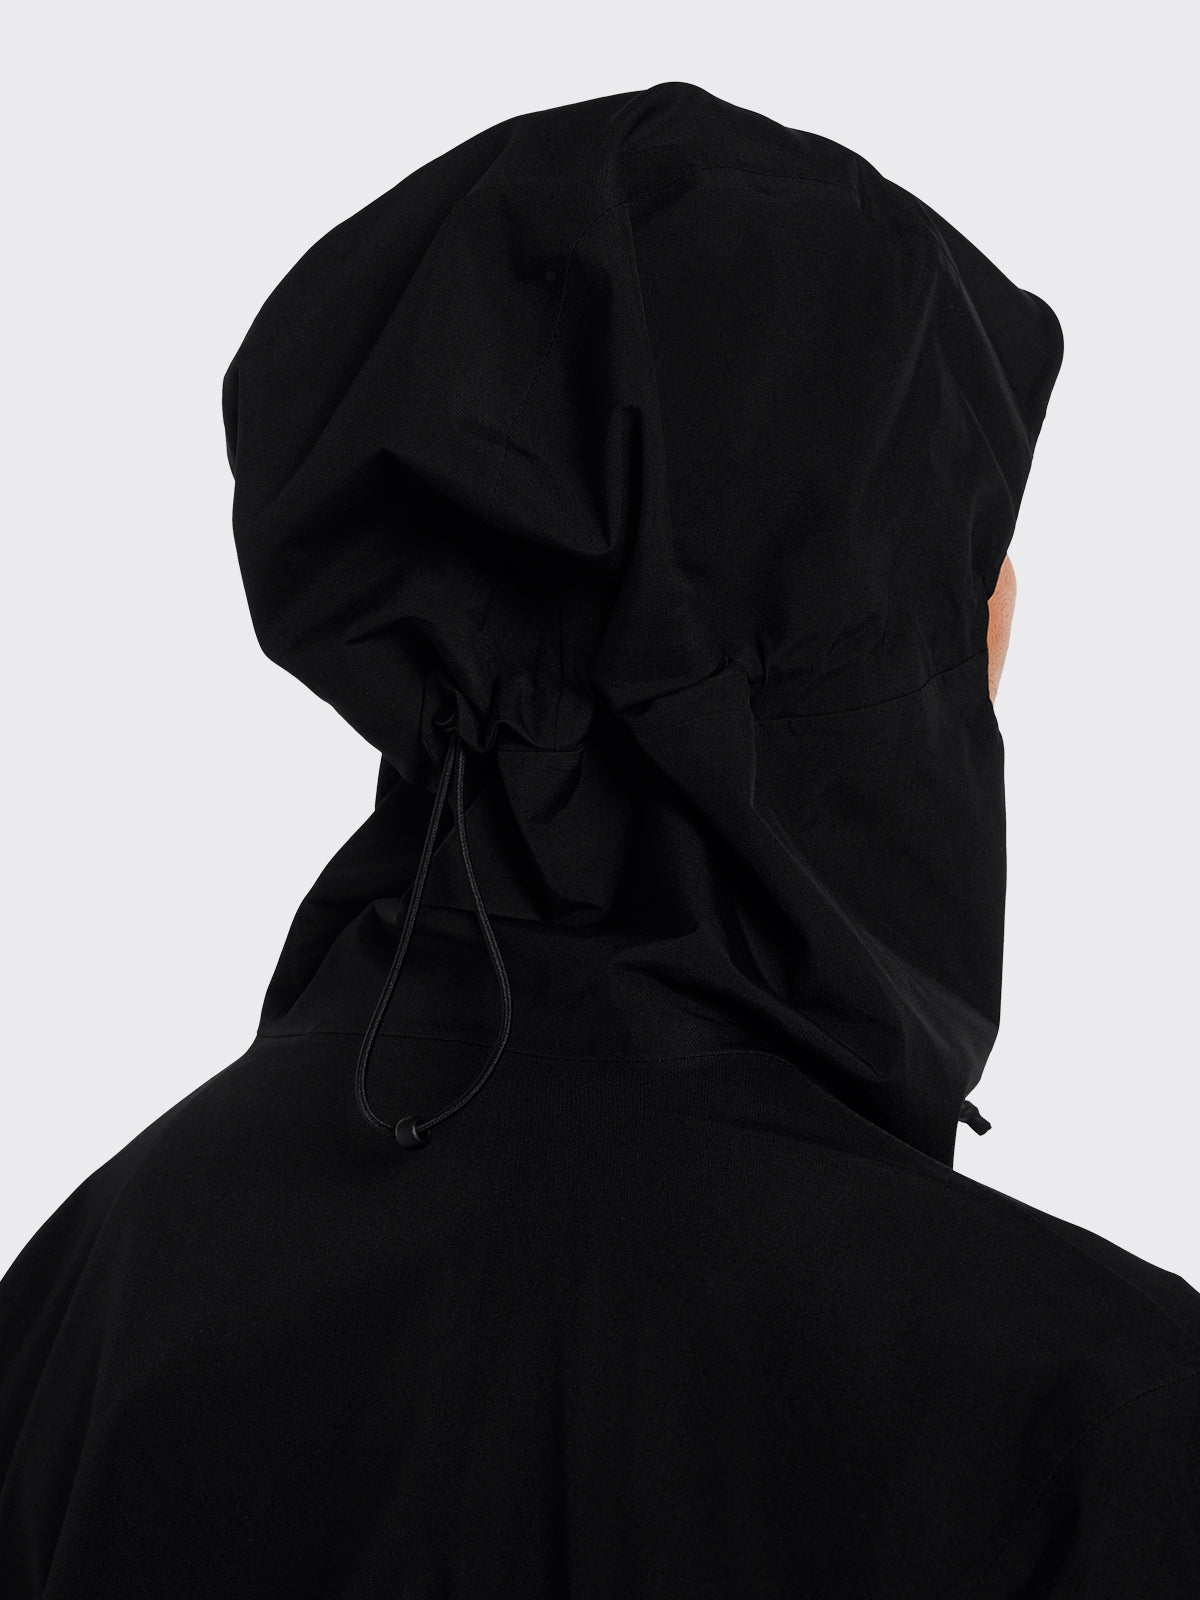 Man wearing Helleren jacket by Blæst in Black